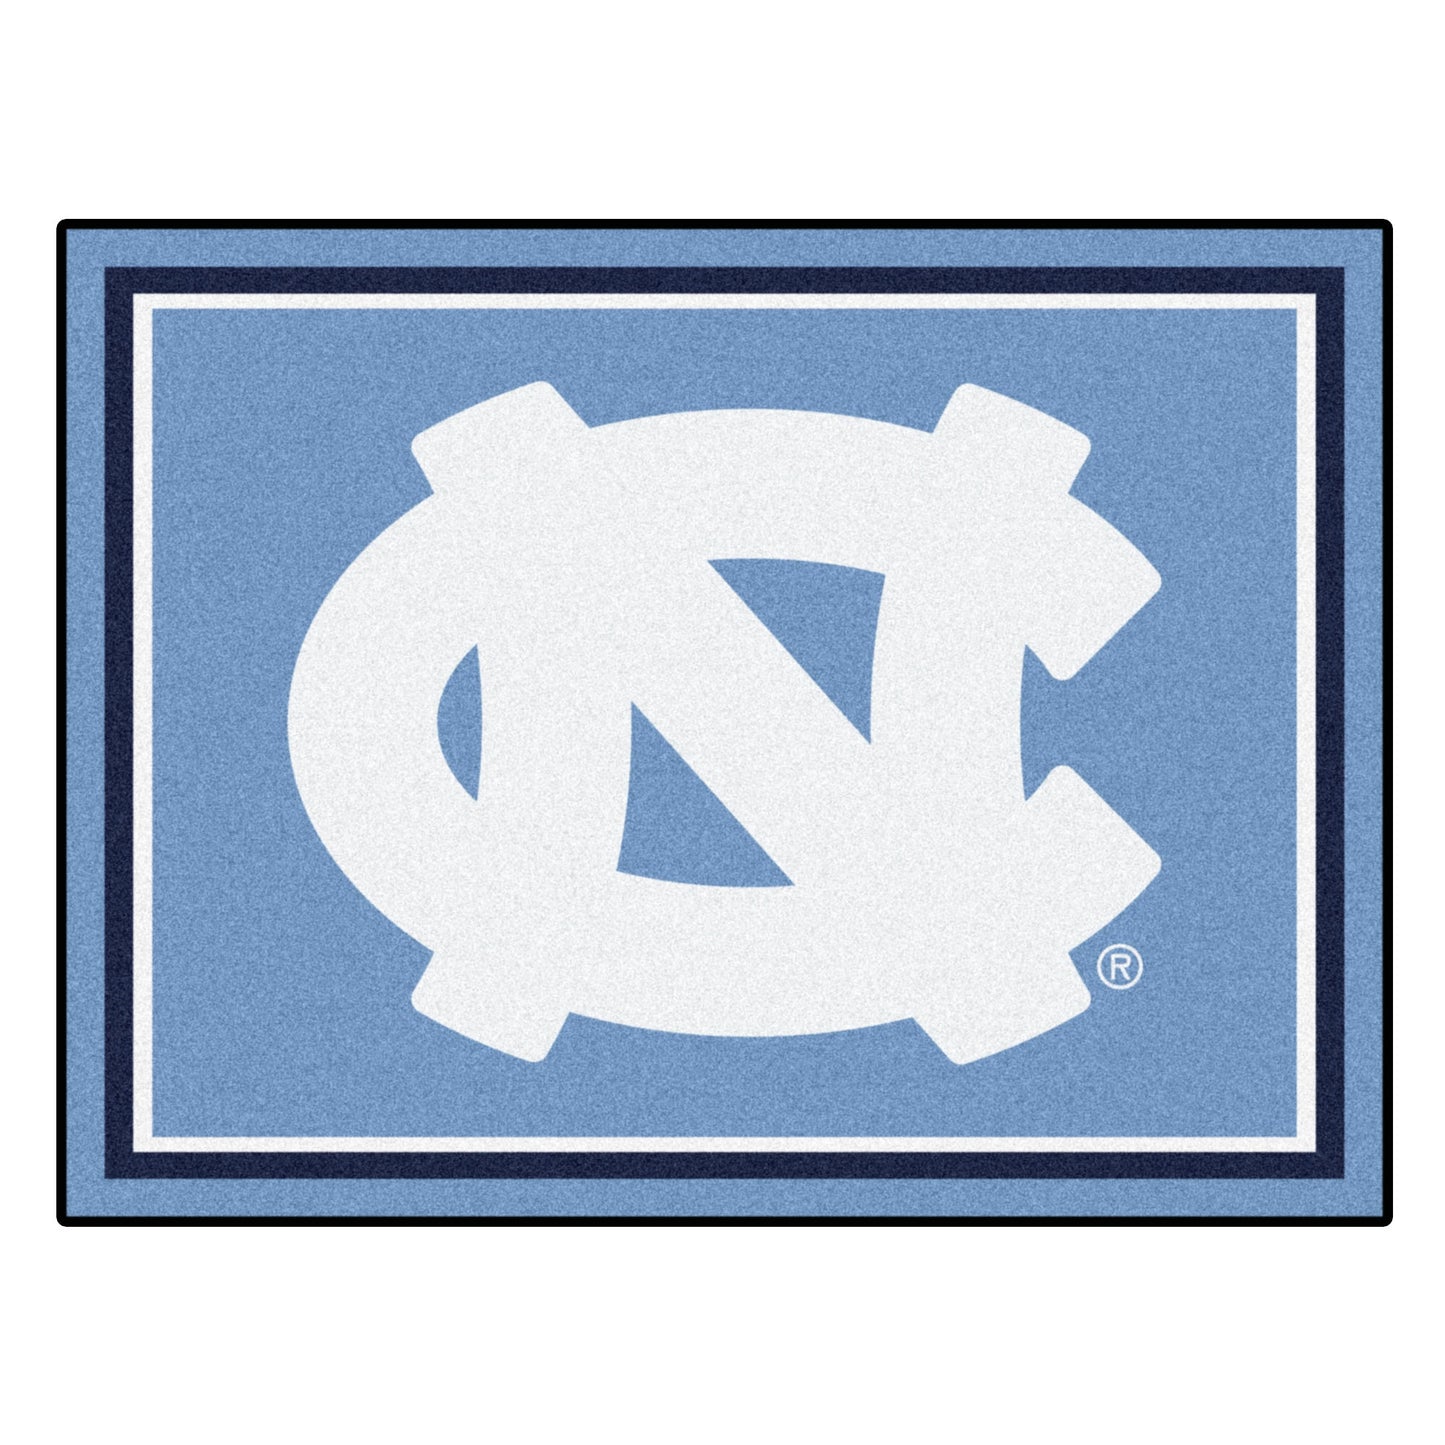 North Carolina Tar Heels 8x10 Rug with NC Logo by Fanmats